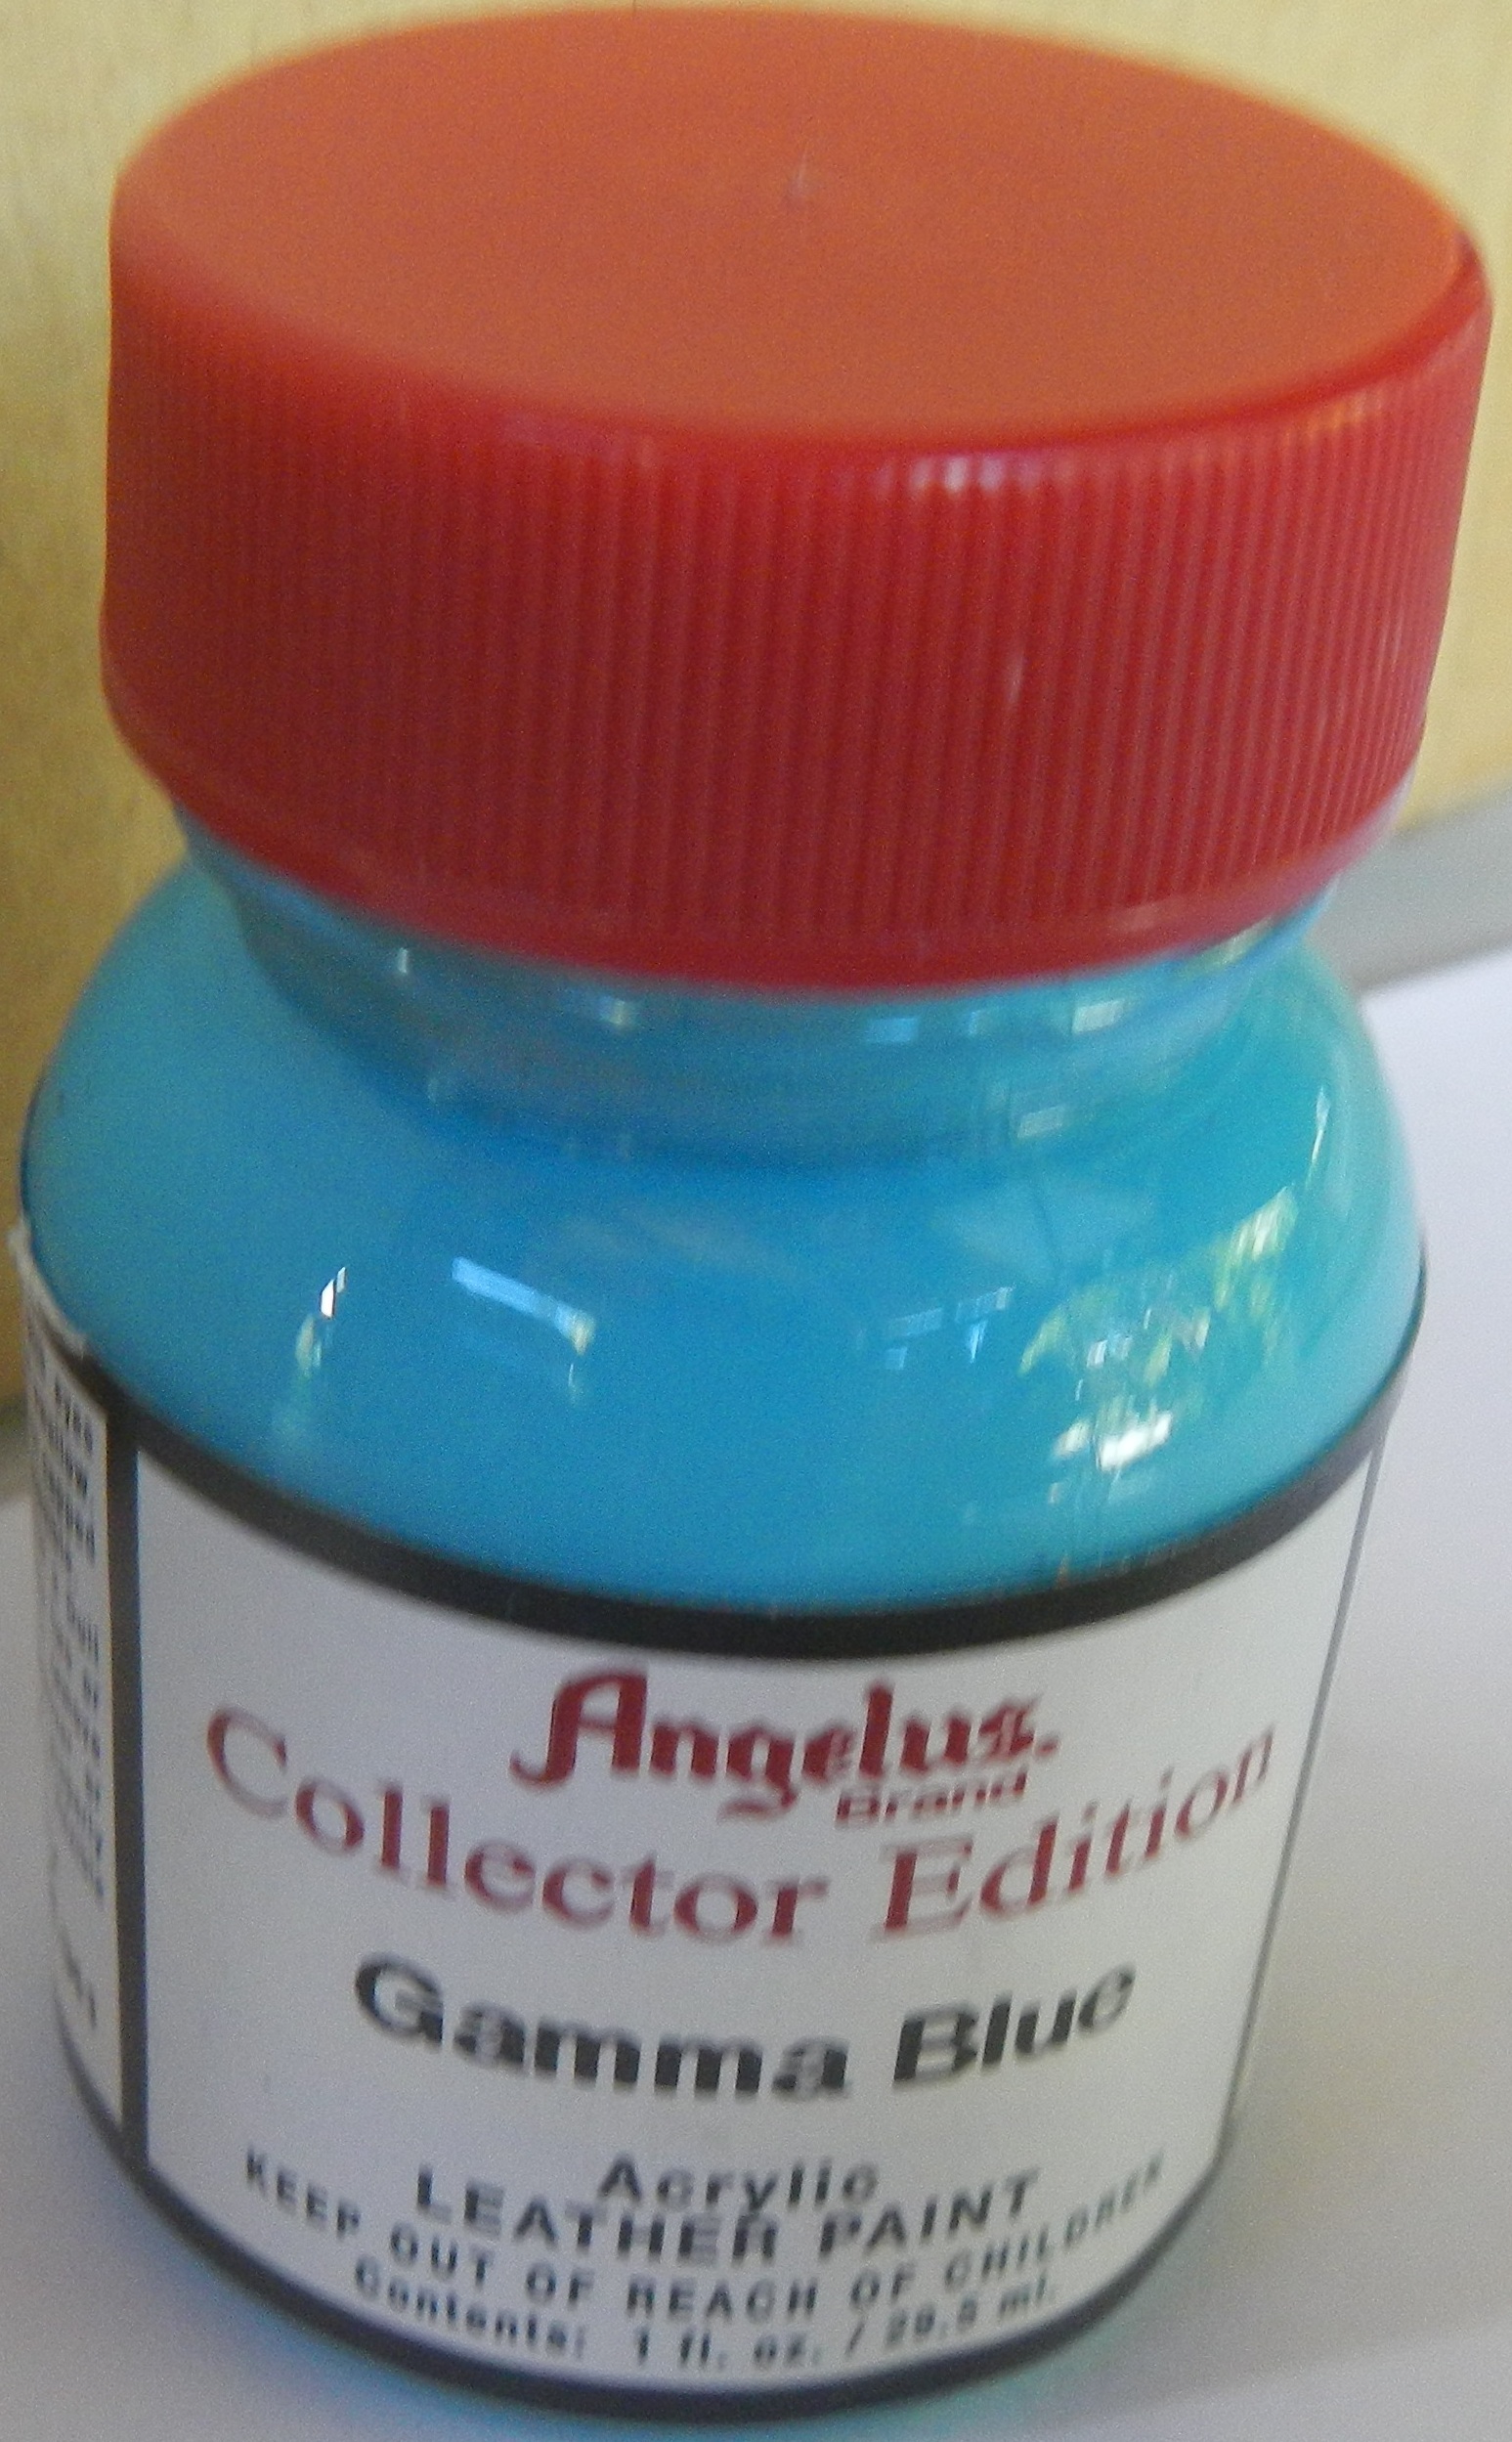 Angelus Gamma Blue Collector Edition